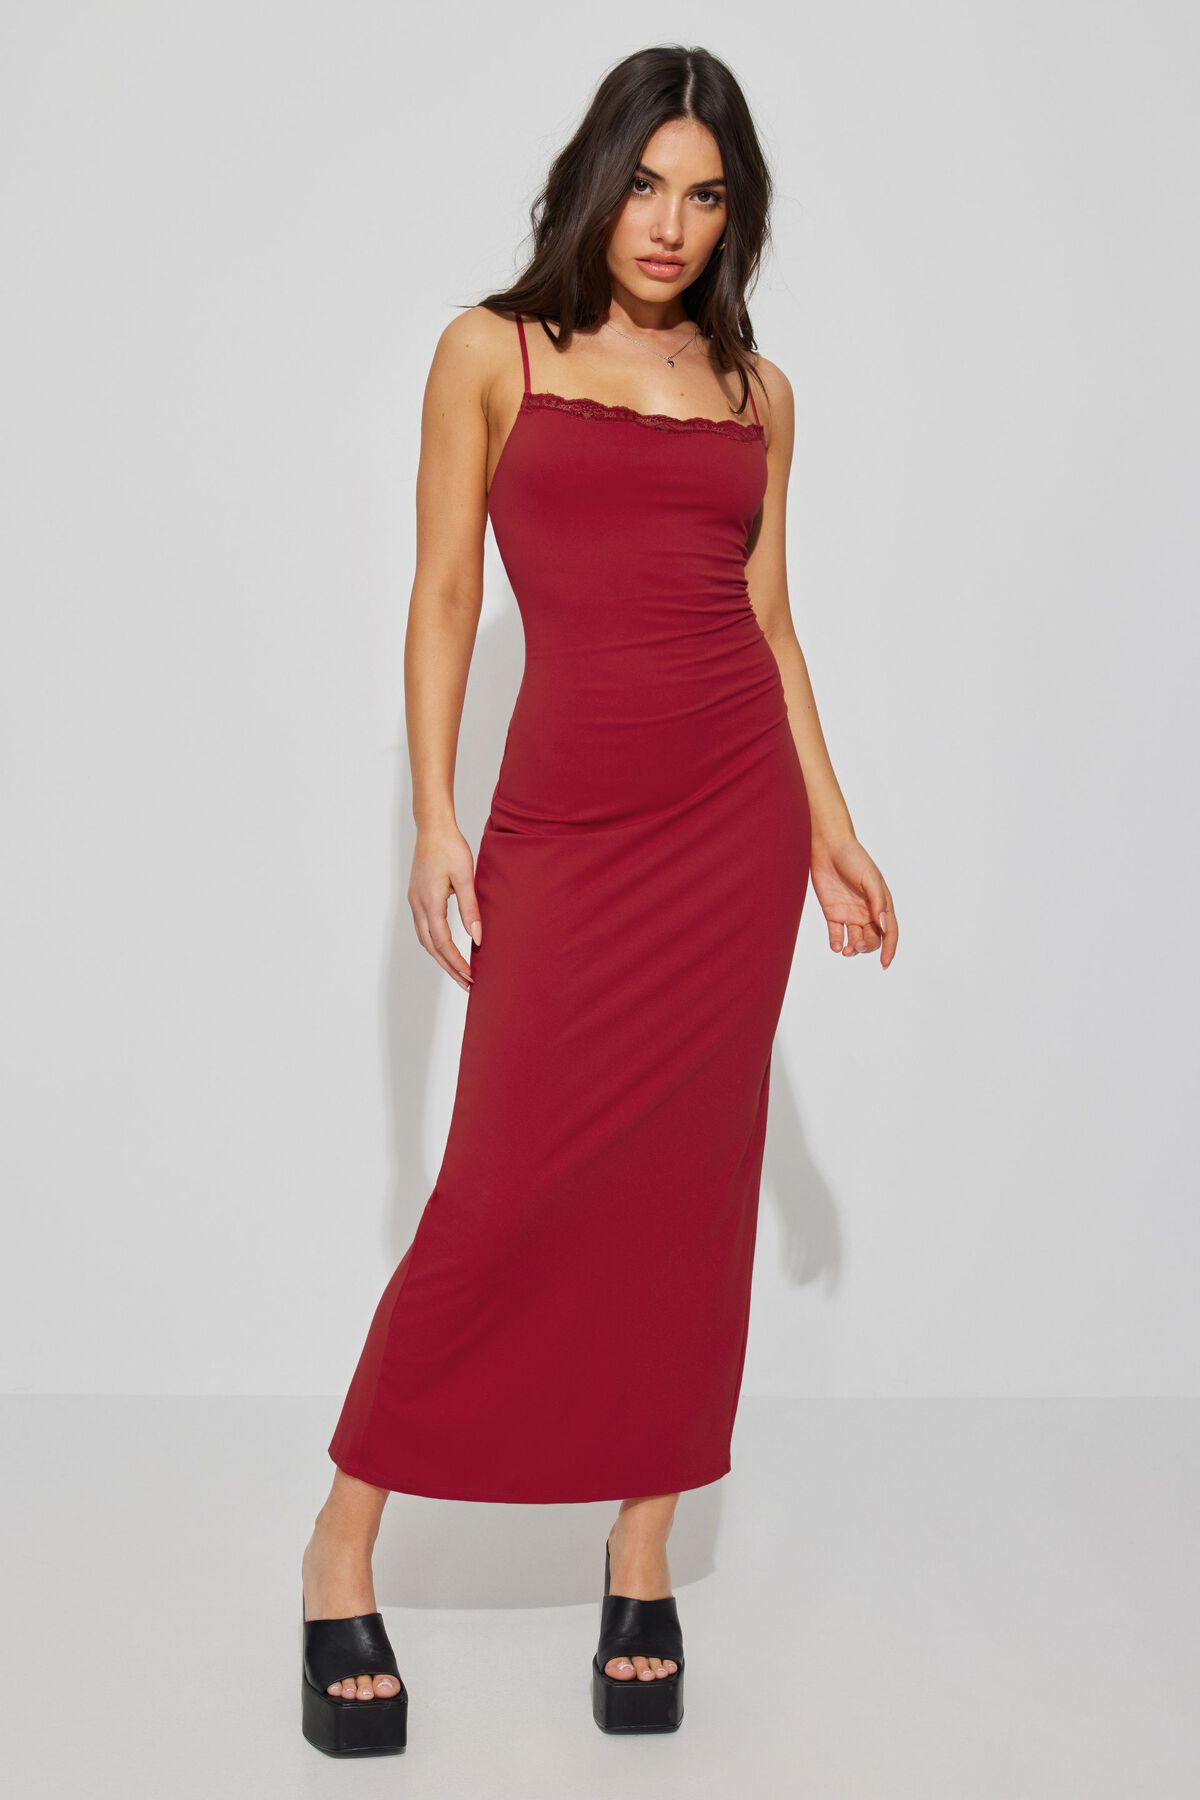 Tianna Lace Trim Maxi Dress Red